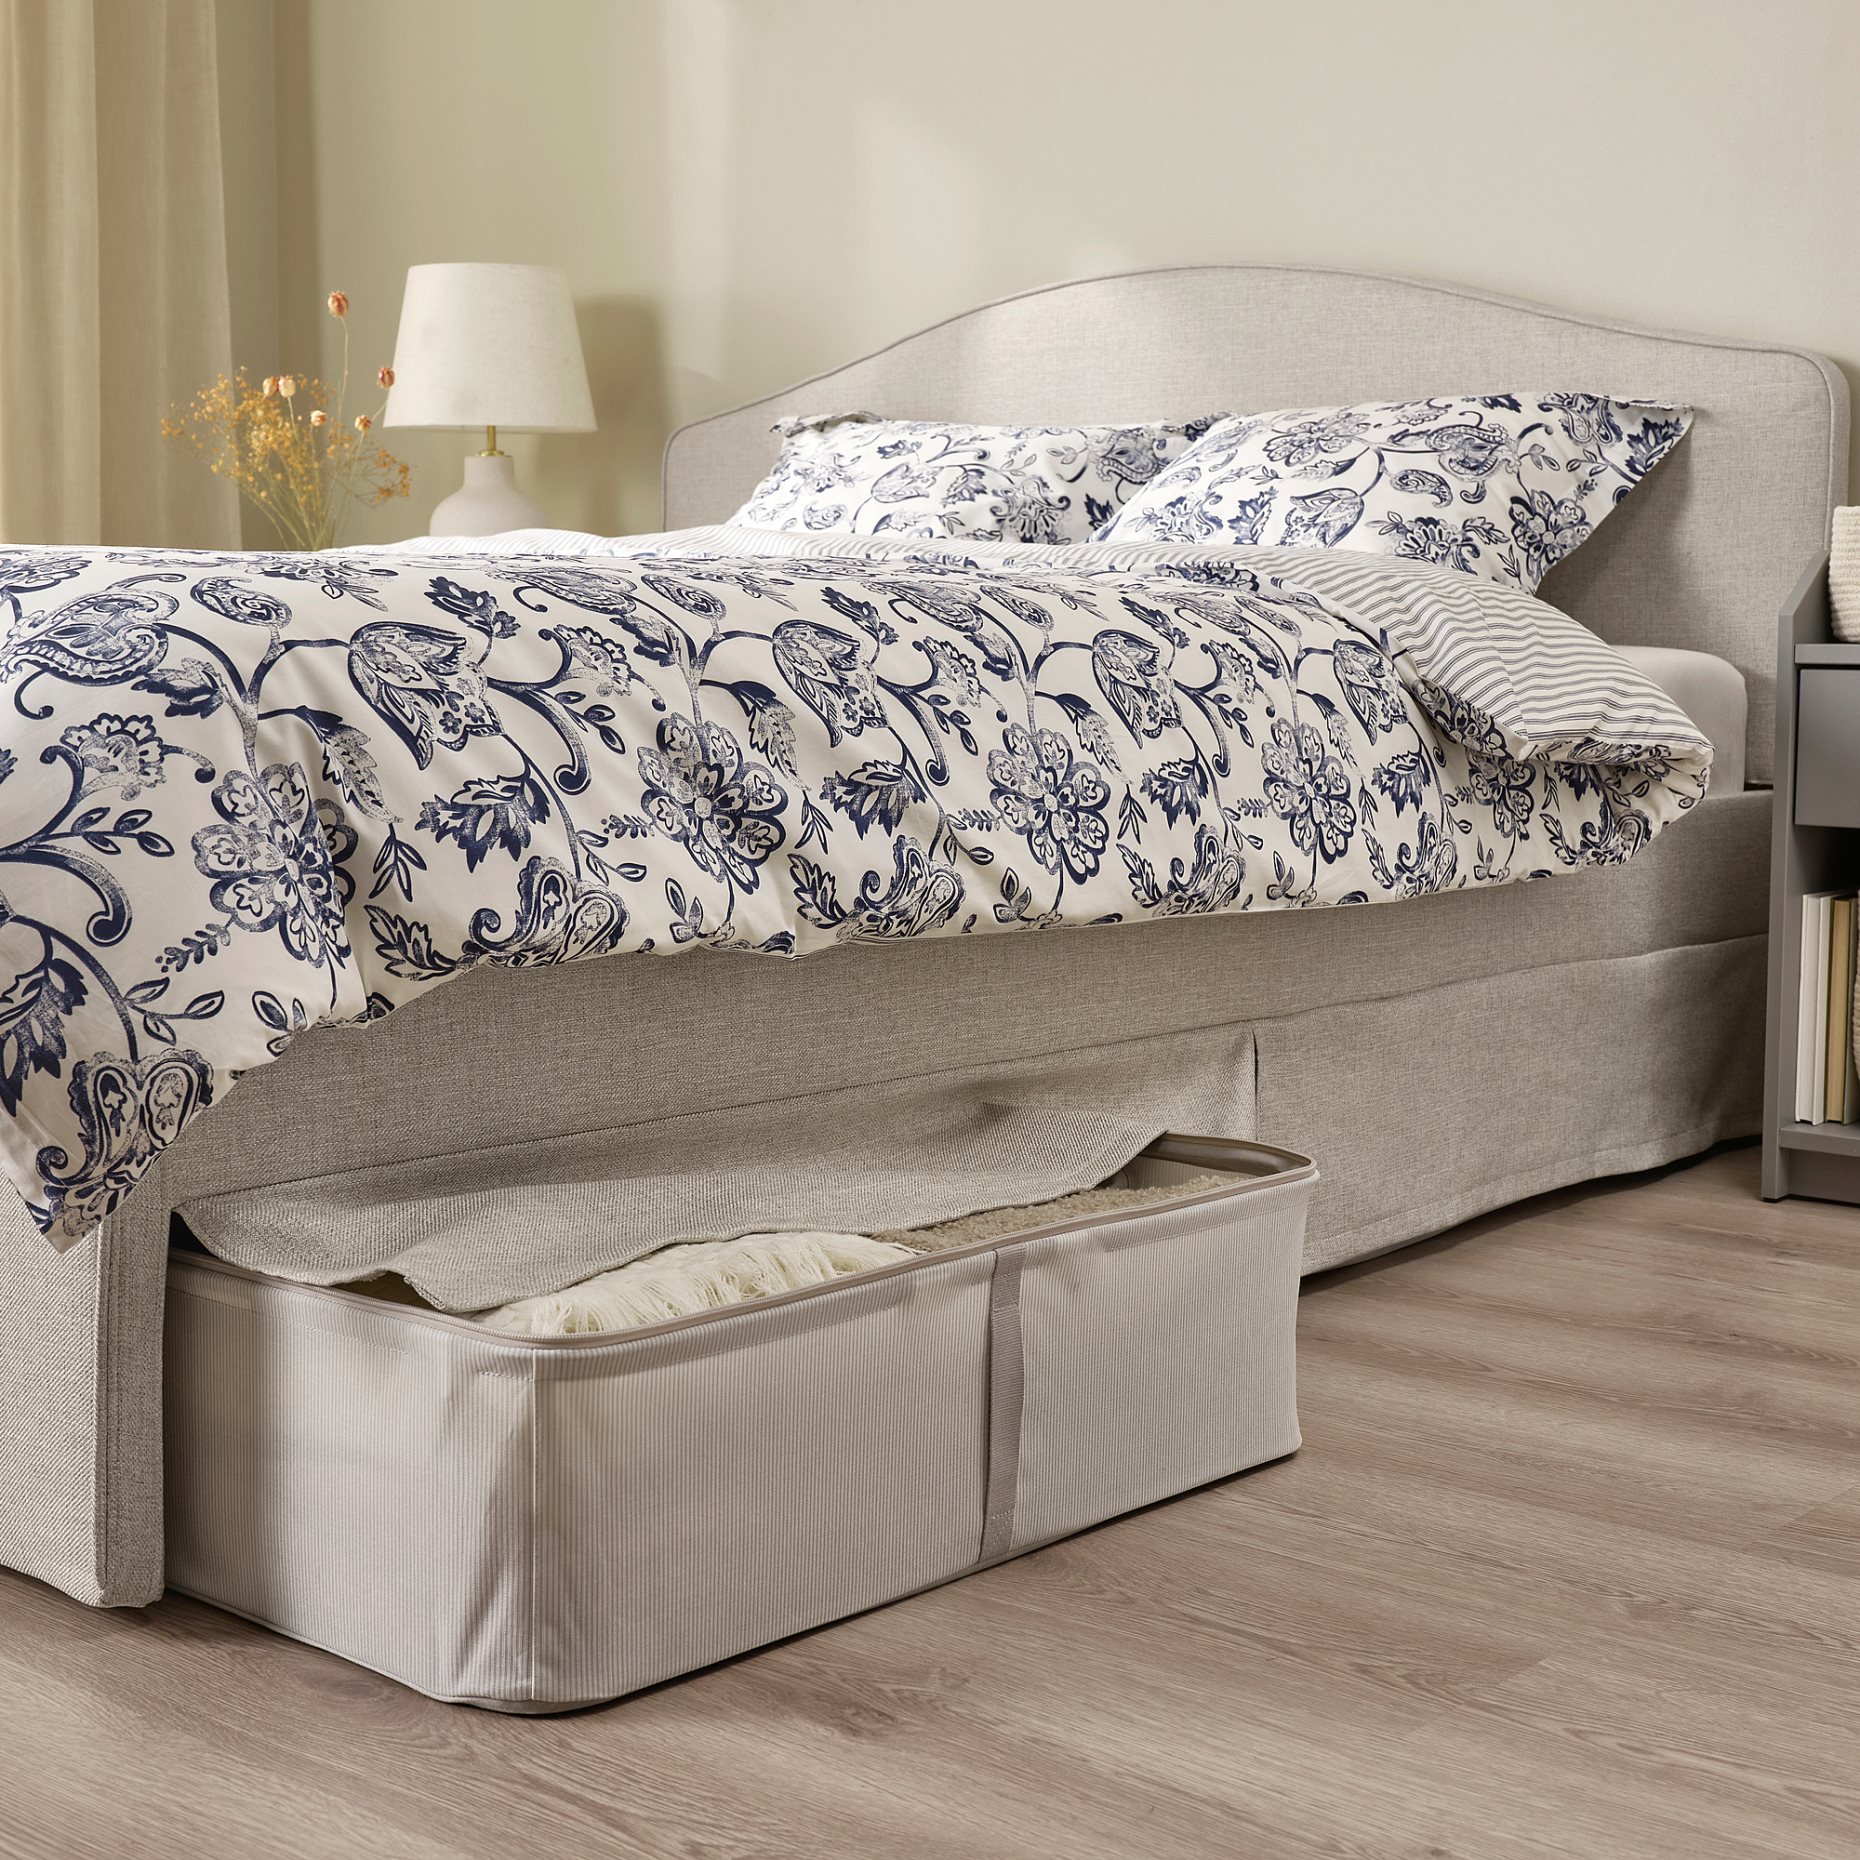 RAMNEFJALL, κρεβάτι με επένδυση, 140x200 cm, 195.601.57